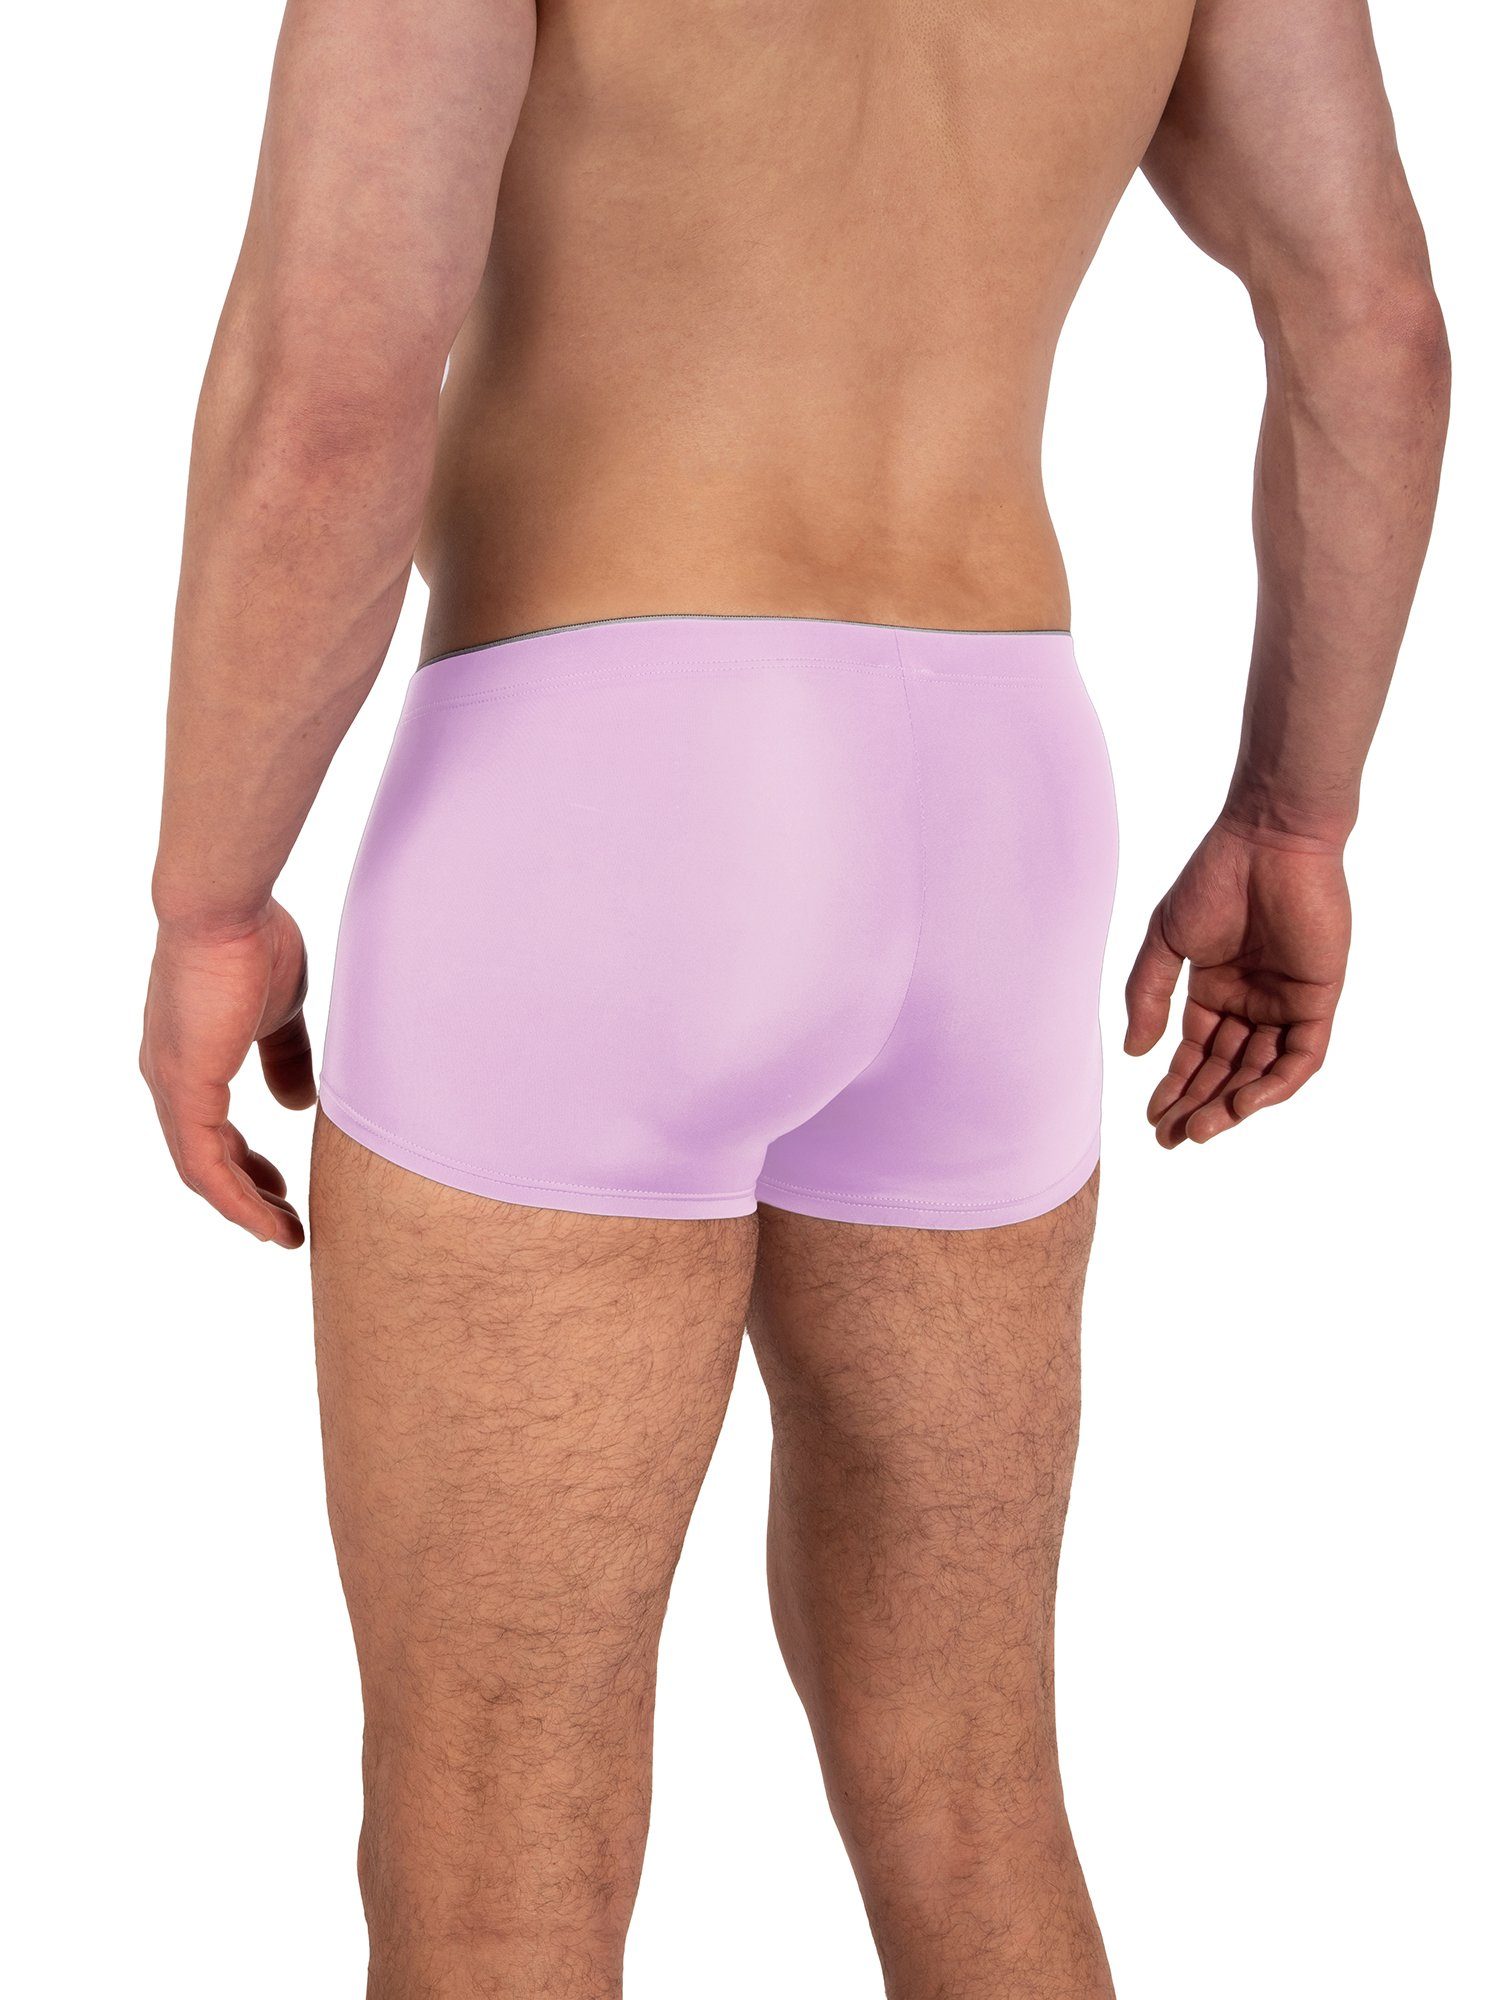 Olaf Benz Retro Minipants lilac Retro-Boxer RED2331 Boxer retroshorts boxershorts